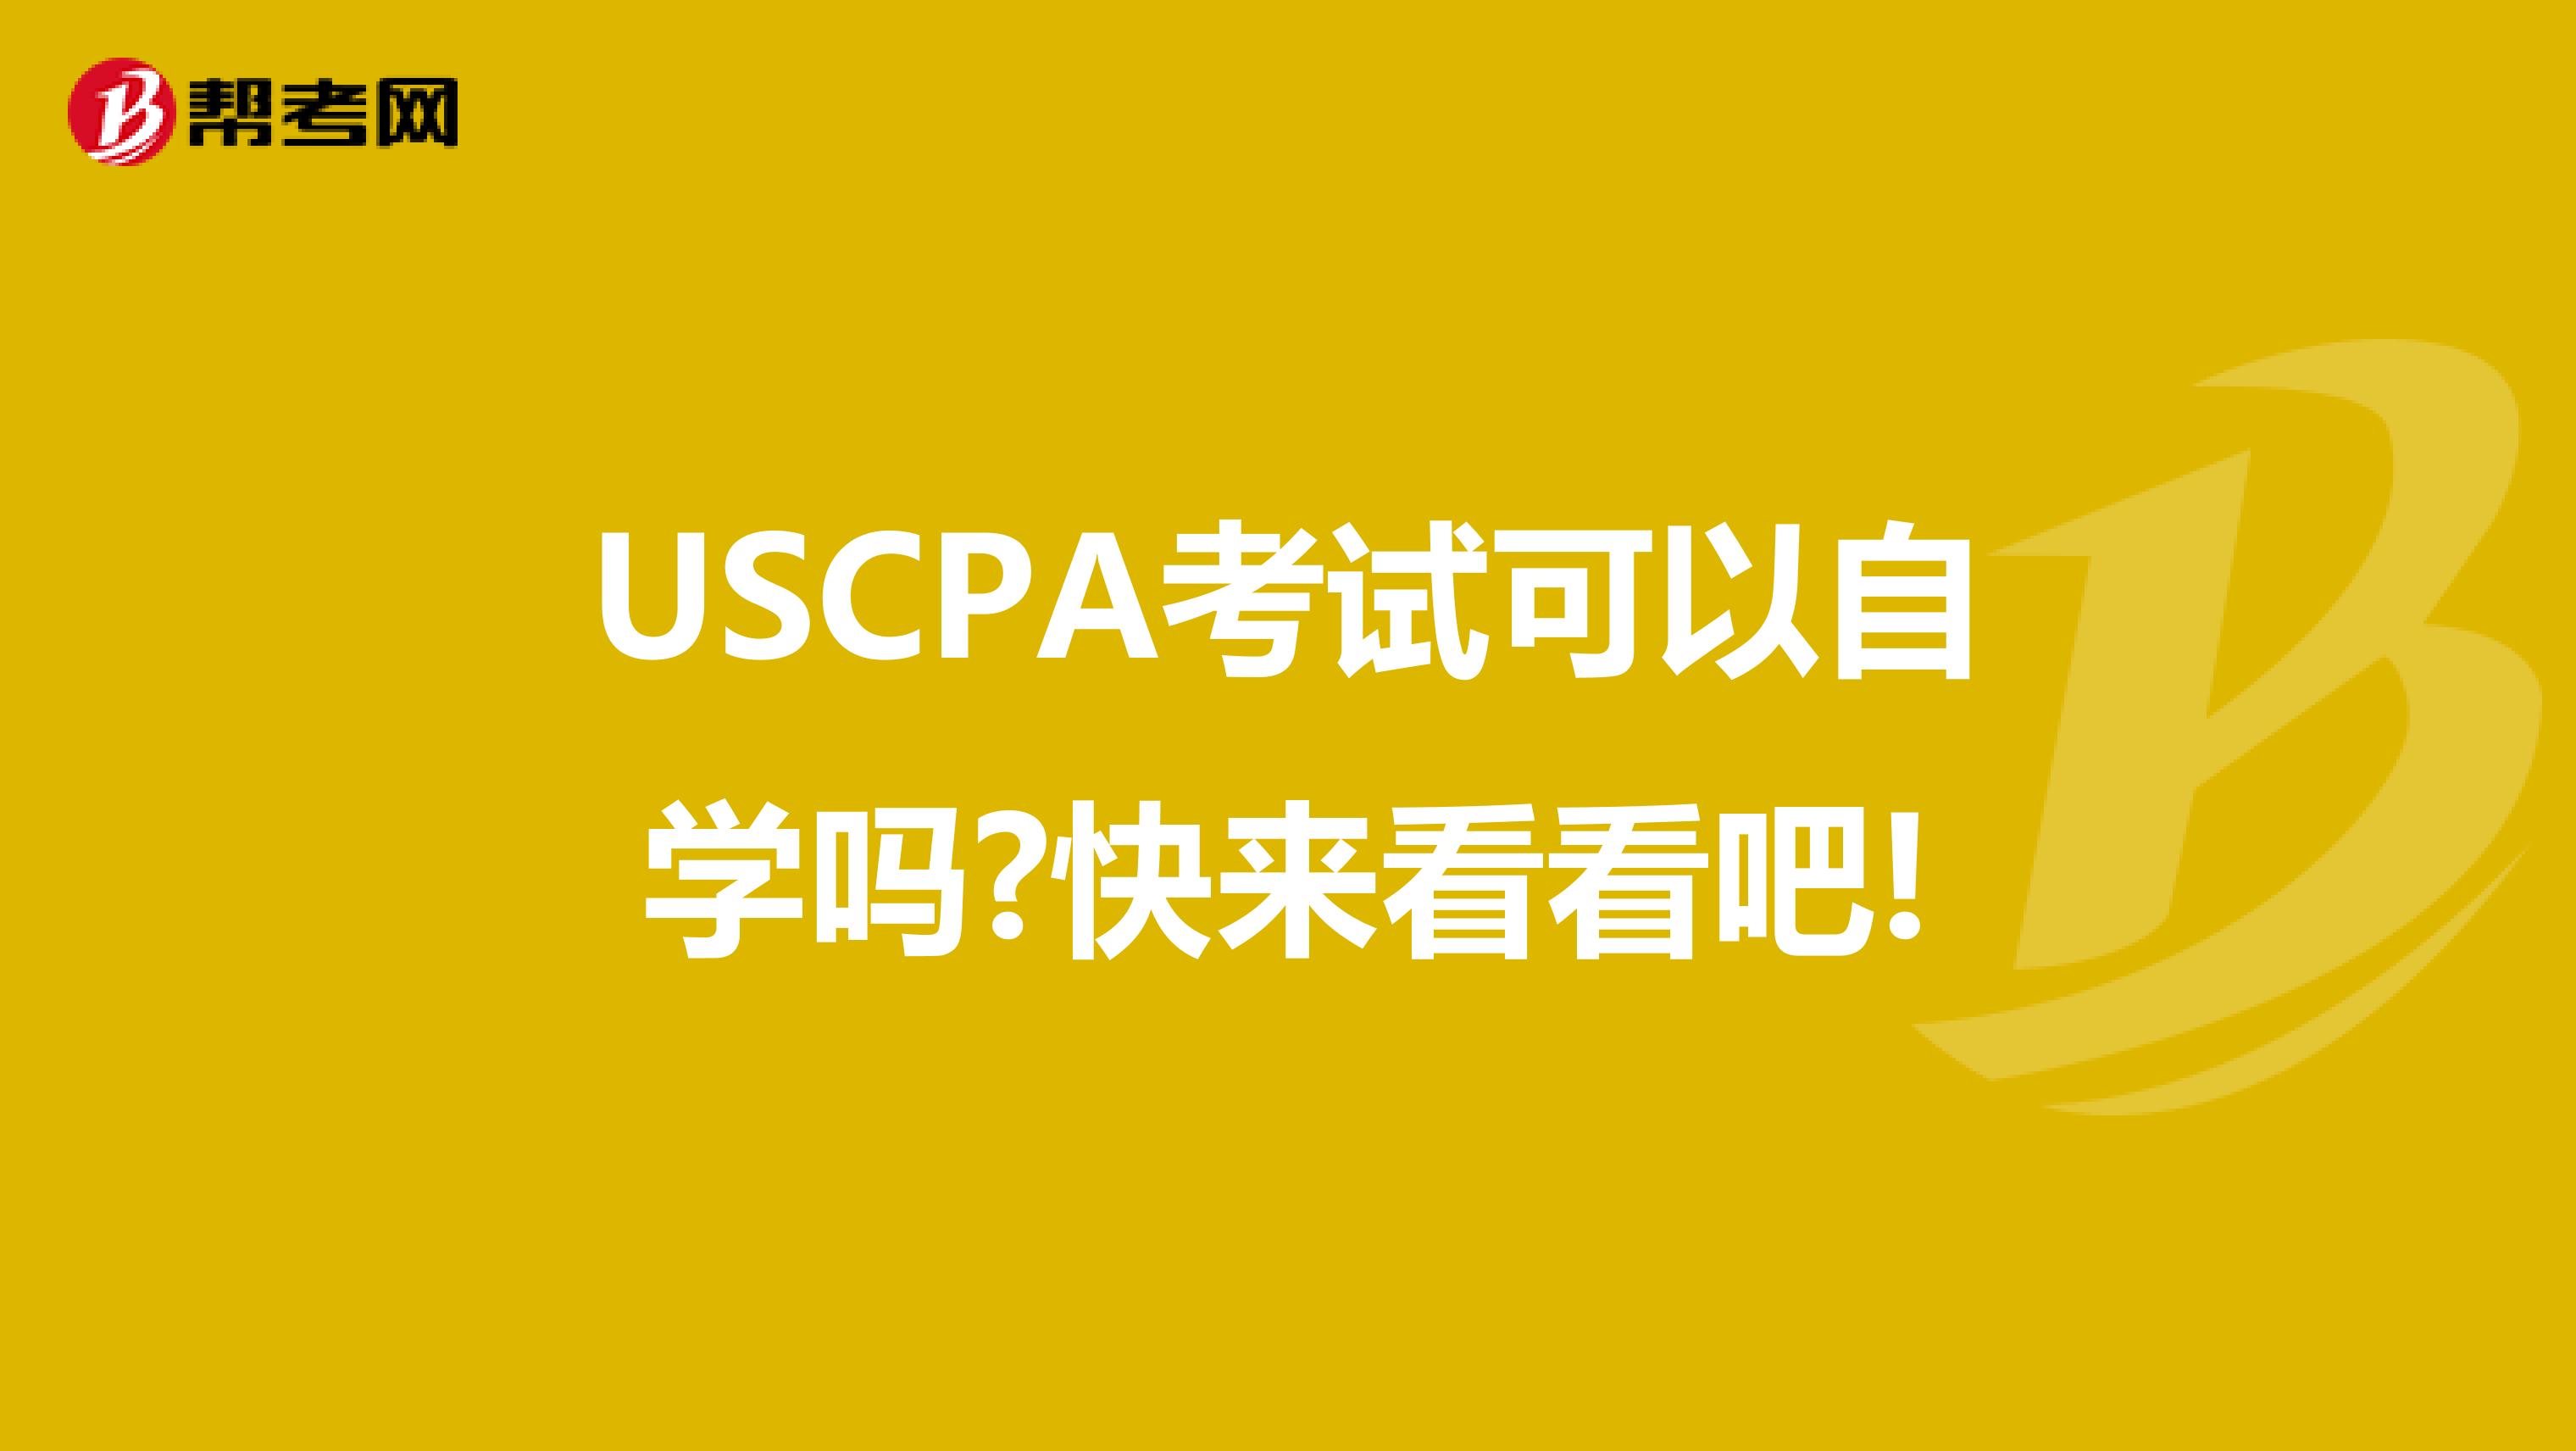 USCPA考试可以自学吗?快来看看吧!